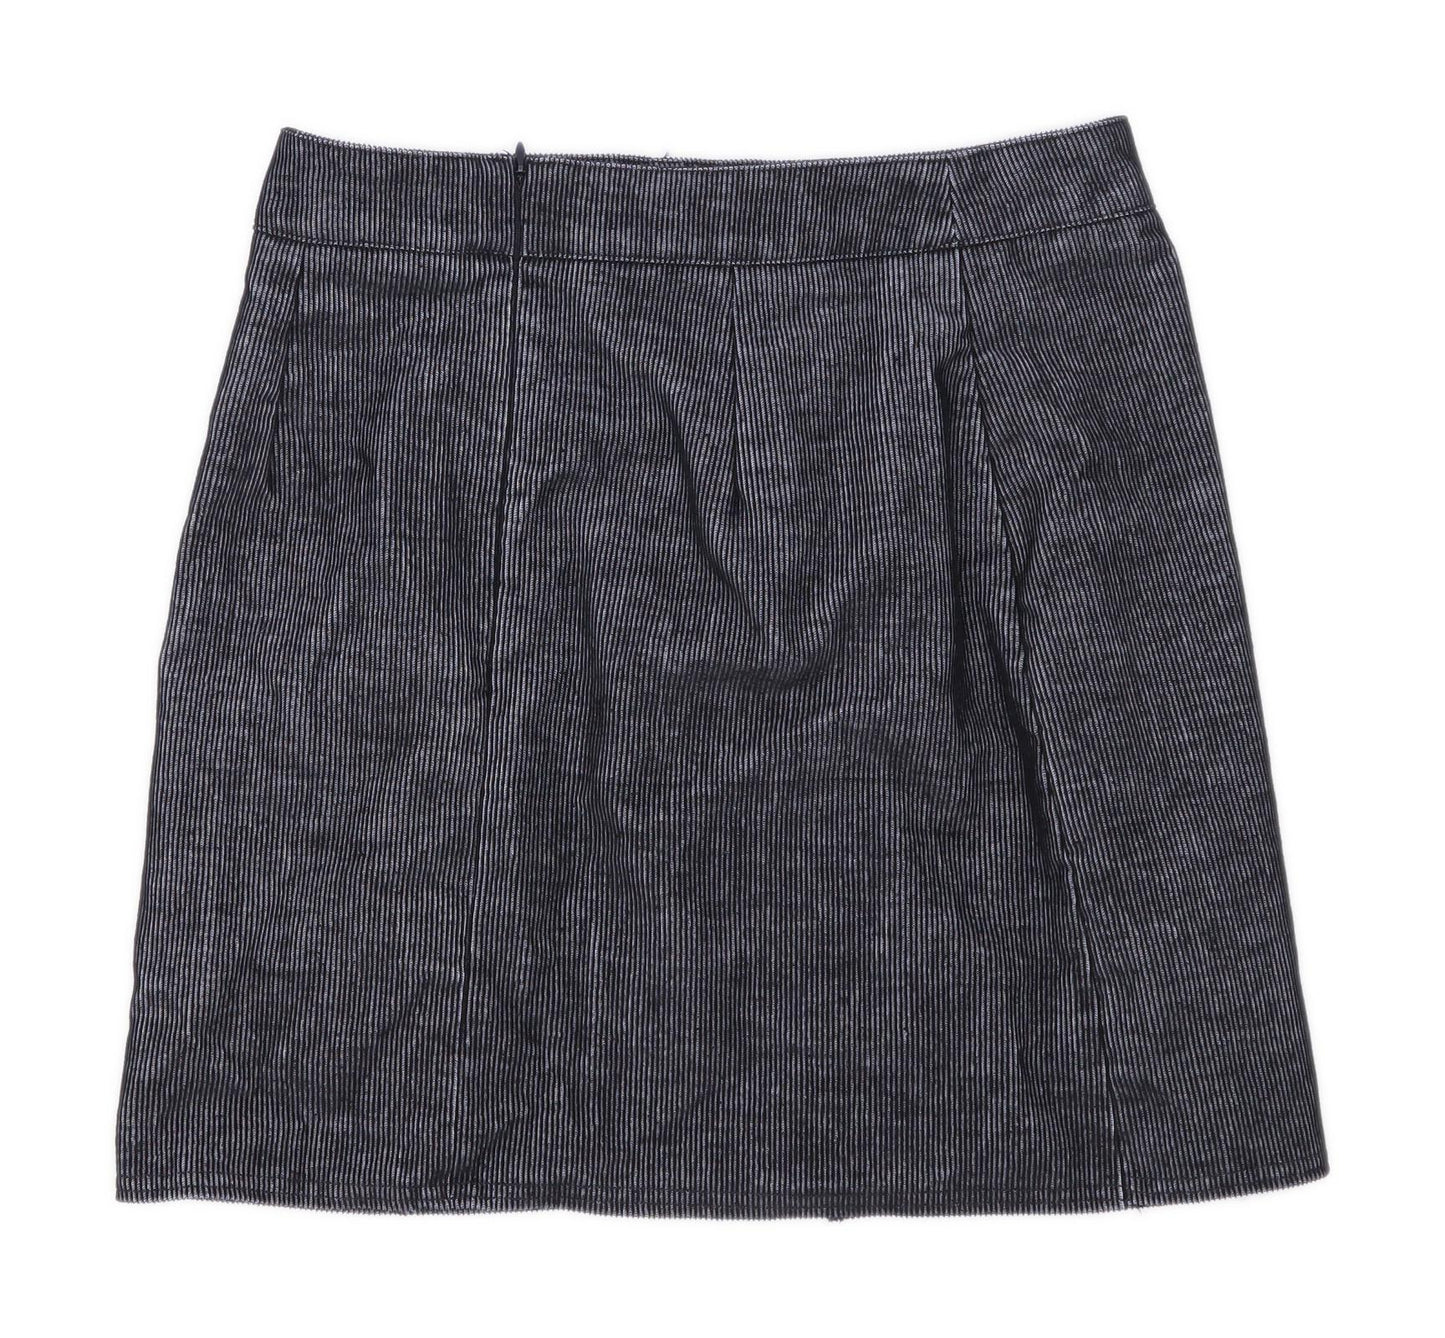 New Look Womens Size 10 Corduroy Multi-Coloured Pleated Skirt (Regular)